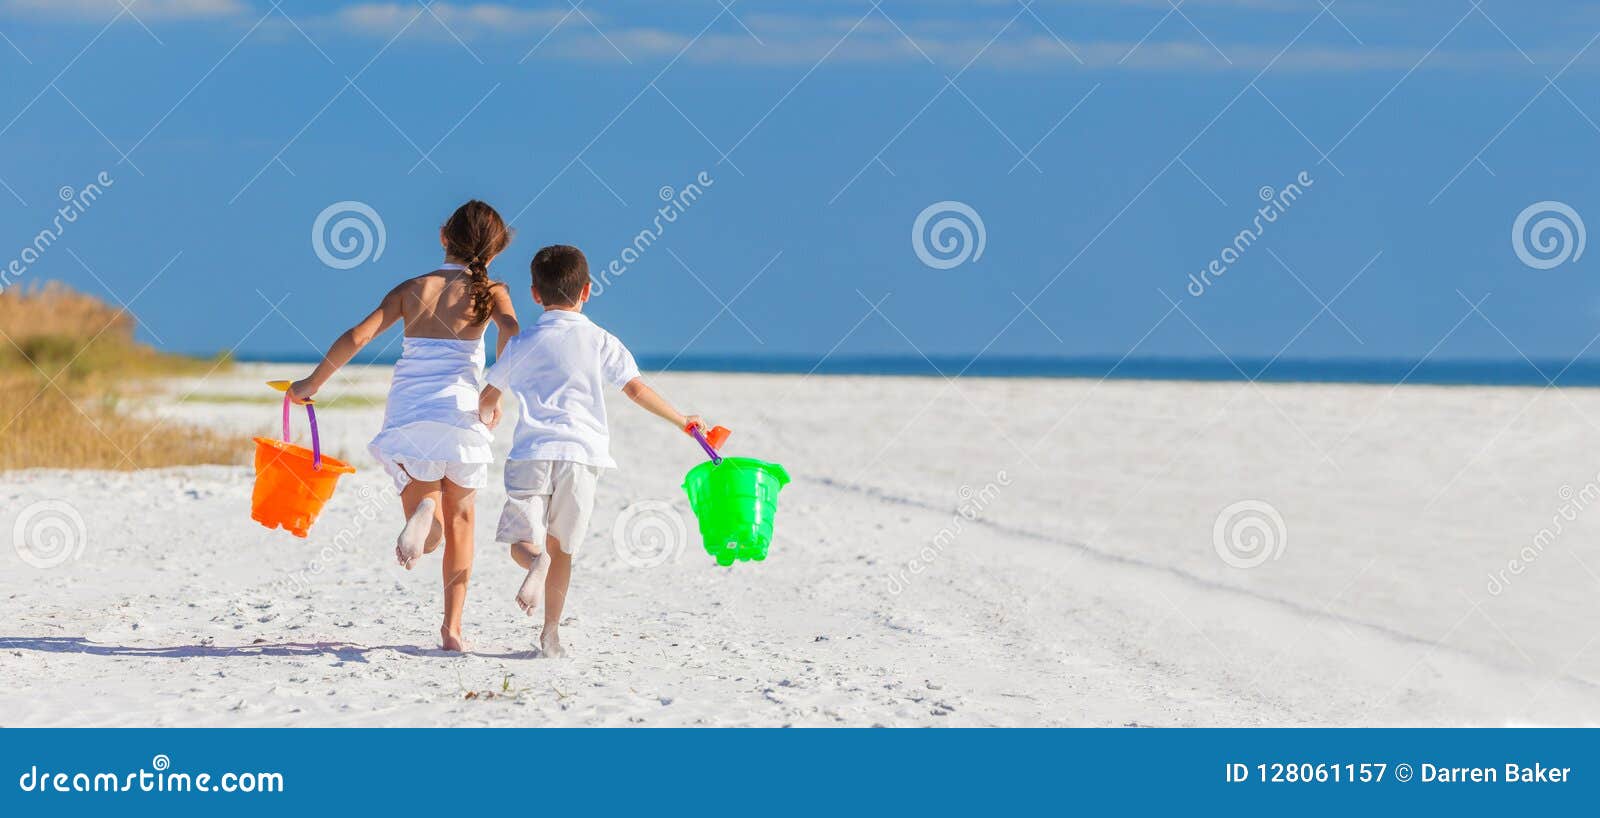 children, boy girl brother sister running playing on beach